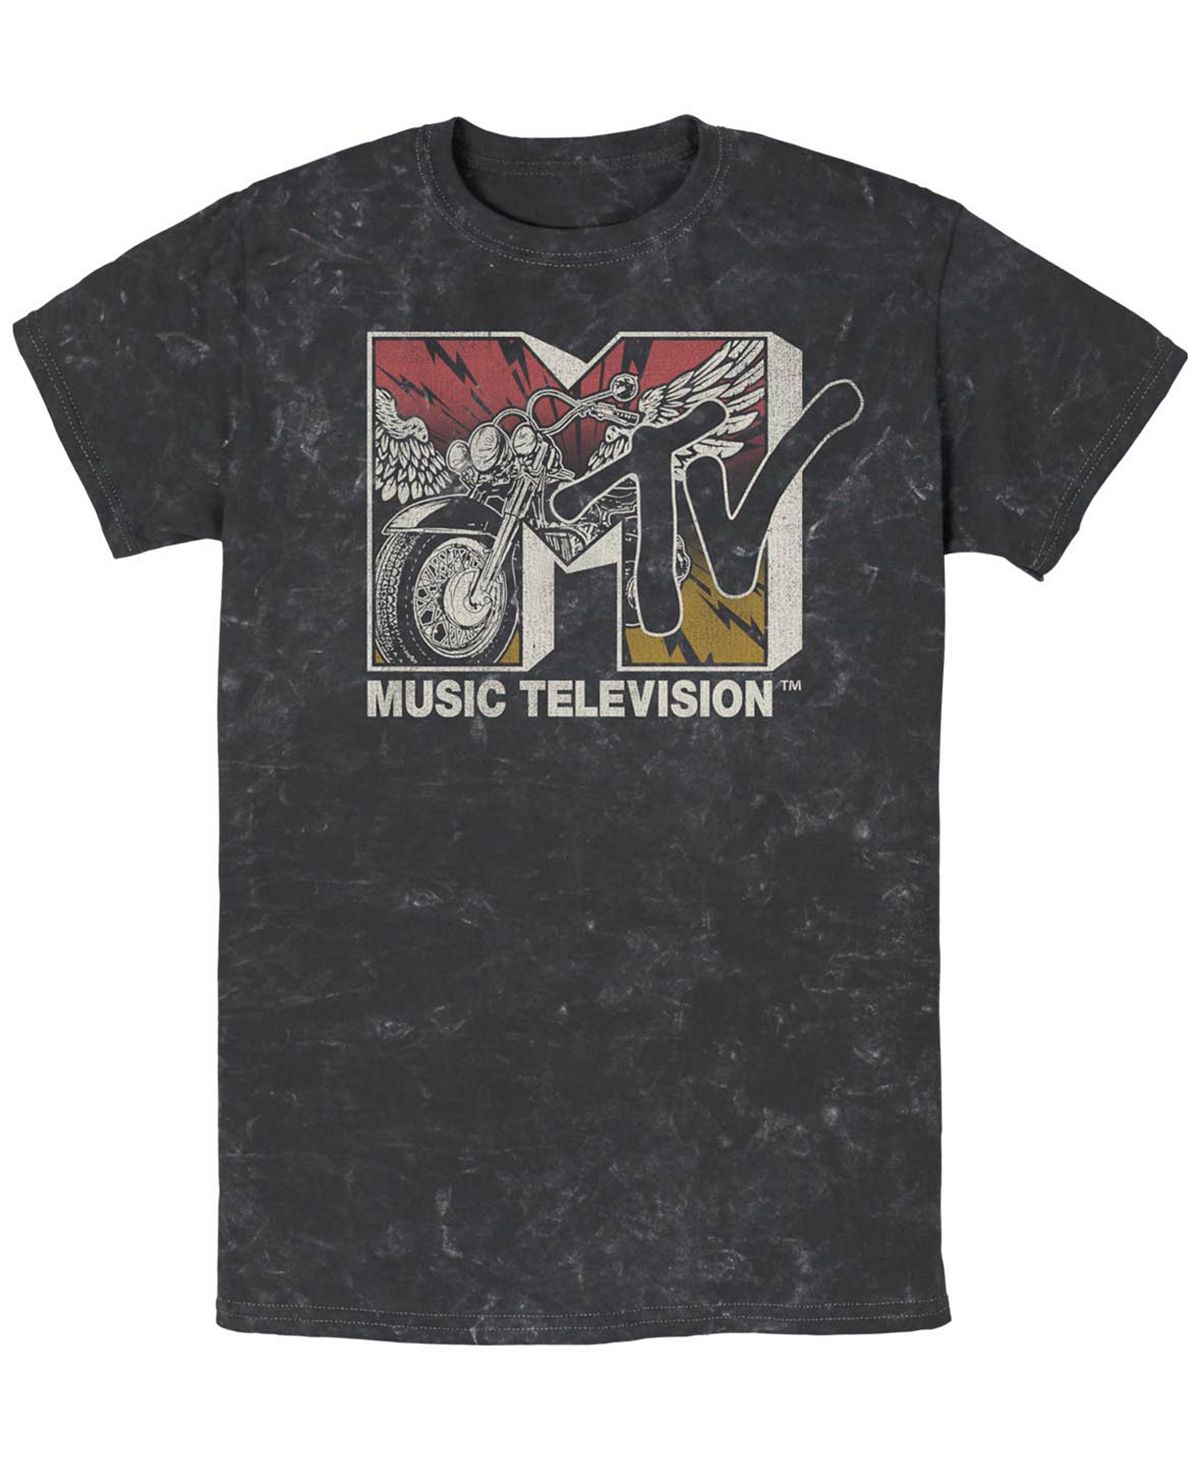 Мужская футболка mtv music ride mineral wash с коротким рукавом Fifth Sun, черный пульт для телевизора mystery mtv 1914l